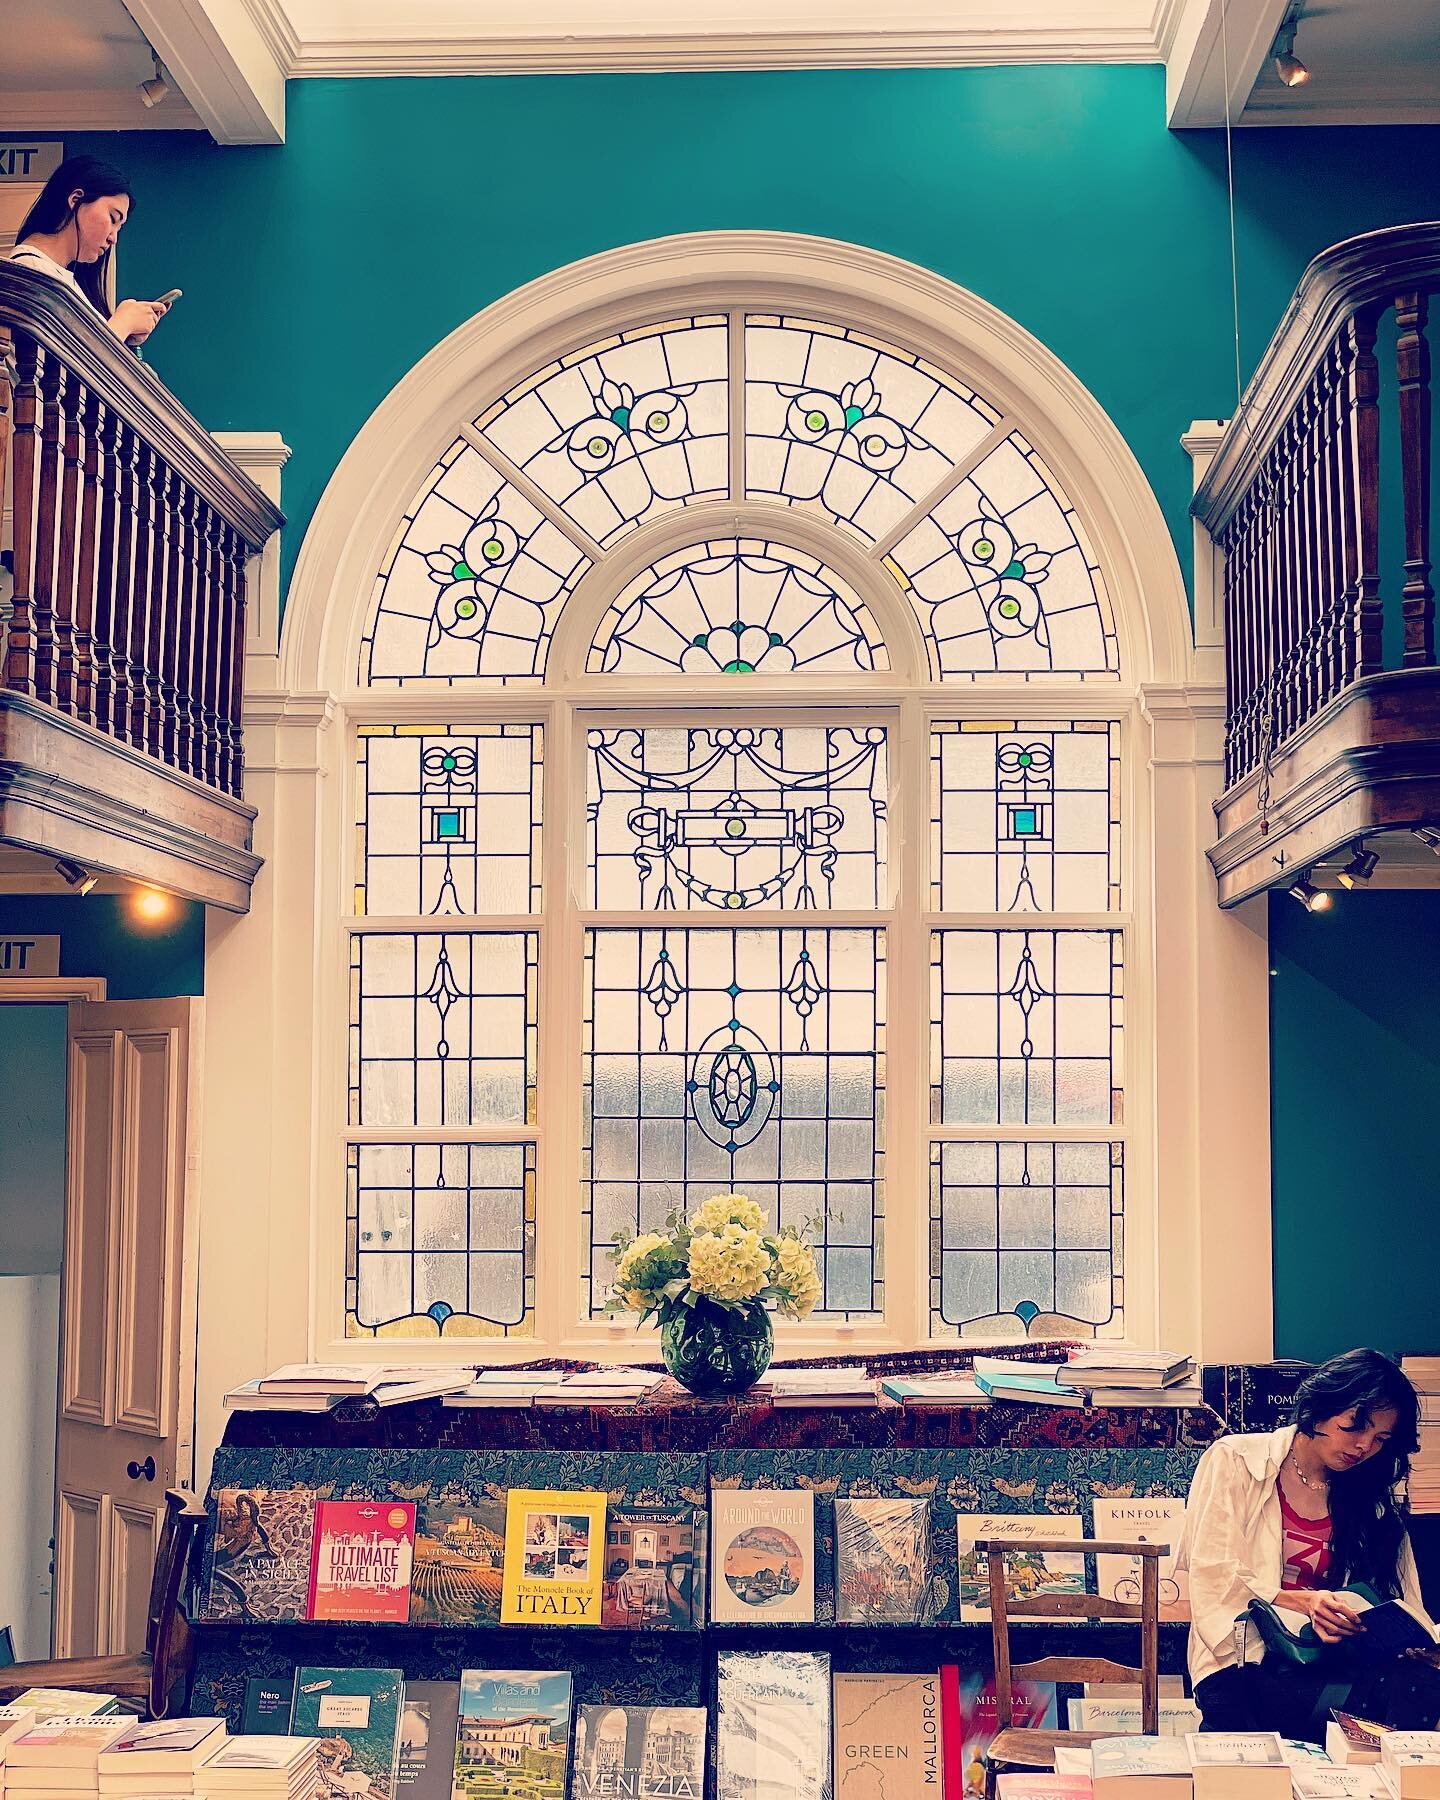 LONDON home @dauntbooks #london #londoner #dauntbooks #books #book #bookstore #independentbookstore #londonlife #londonforever #home #ldn